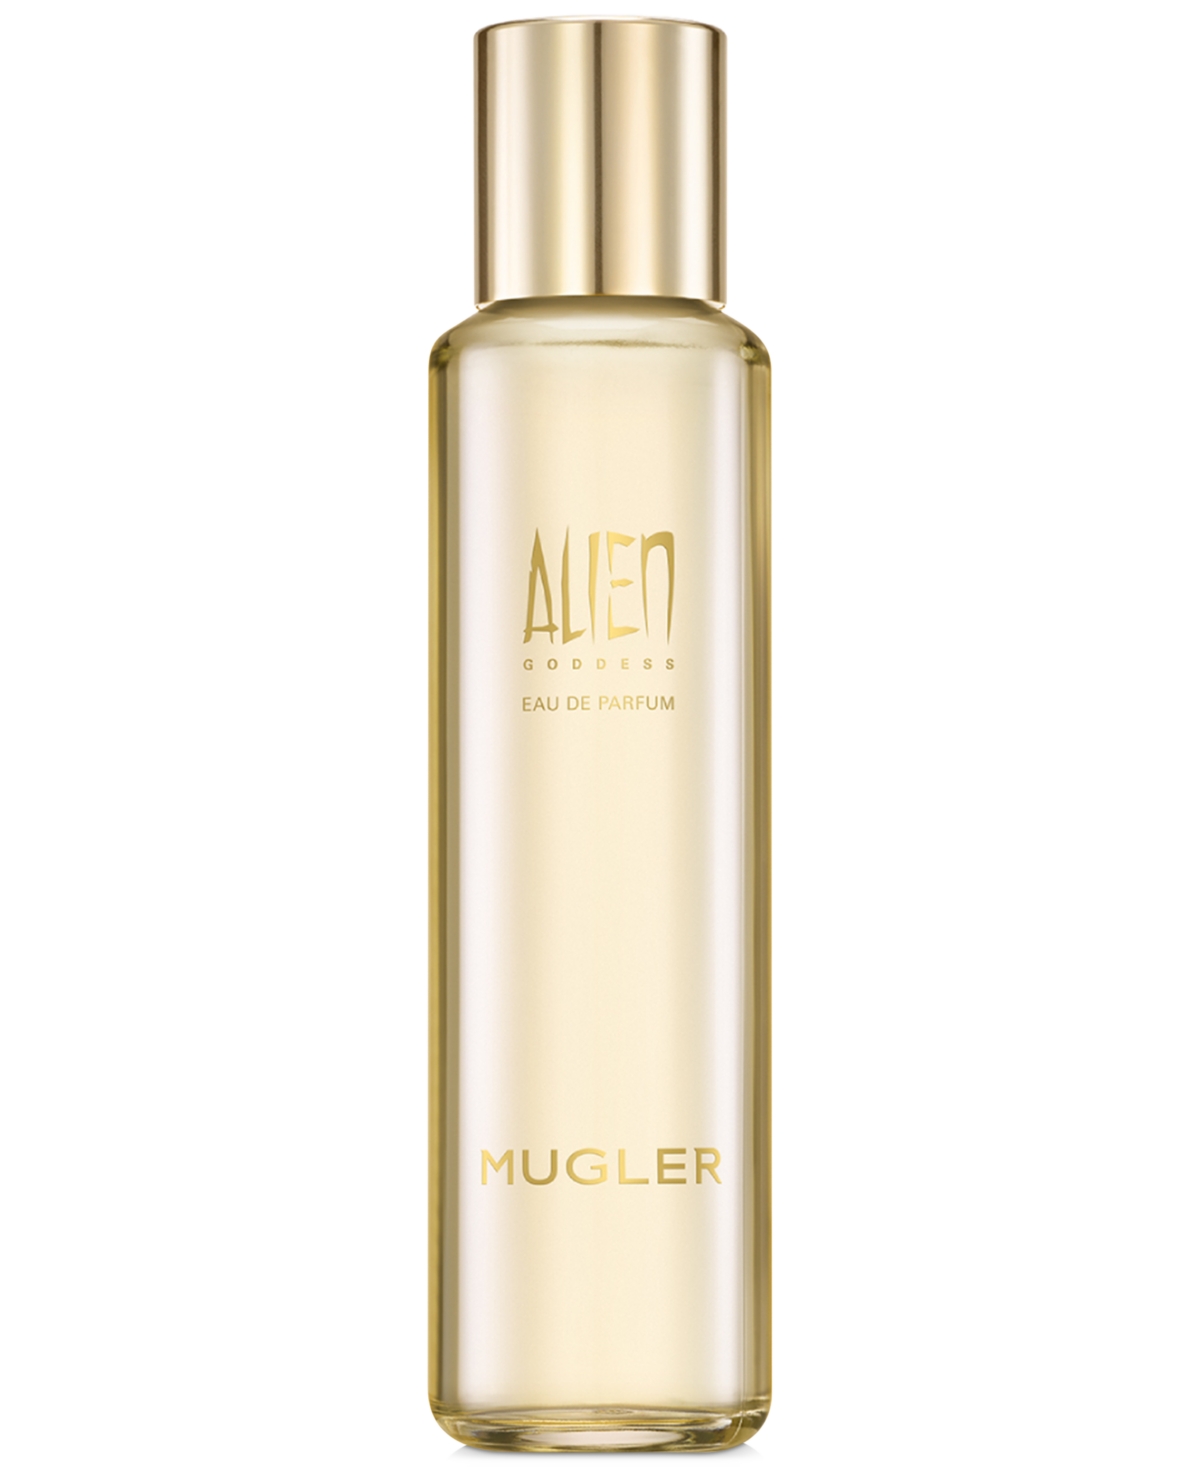 Mugler Alien Goddess Eau De Parfum Refill Bottle, 3.4-oz. In No Color